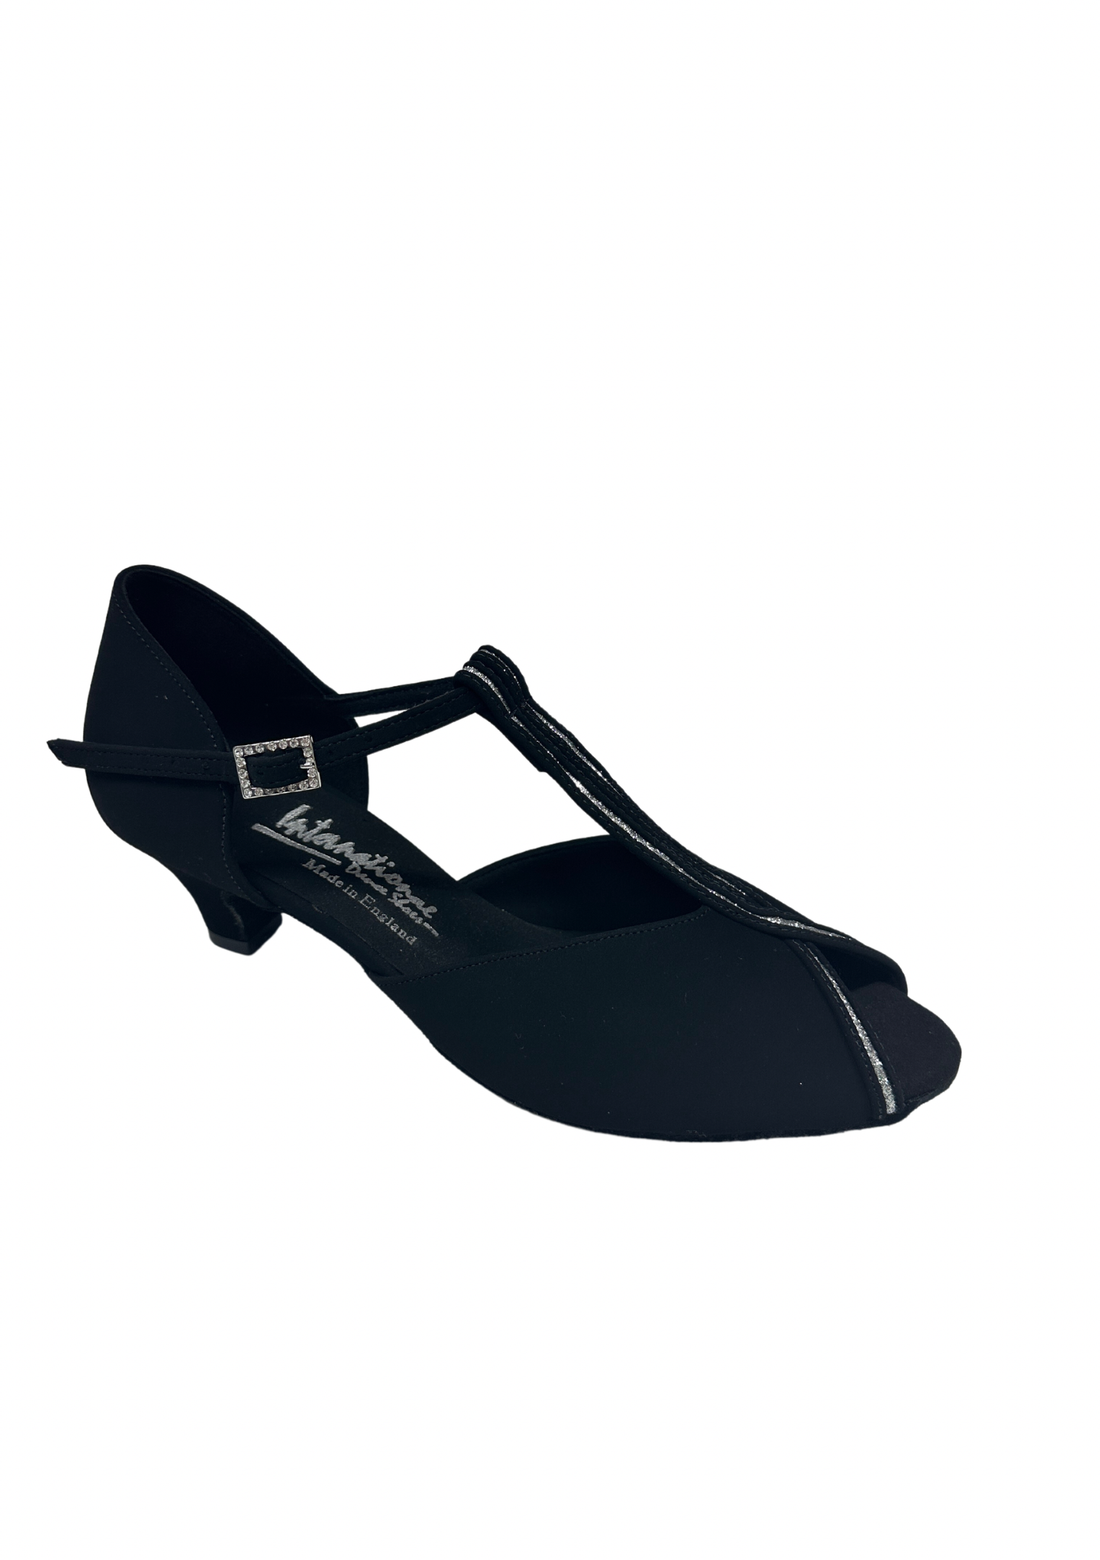 International Dance Shoes Vienna Sequin -  Black Nubuck/Sliver Glitter